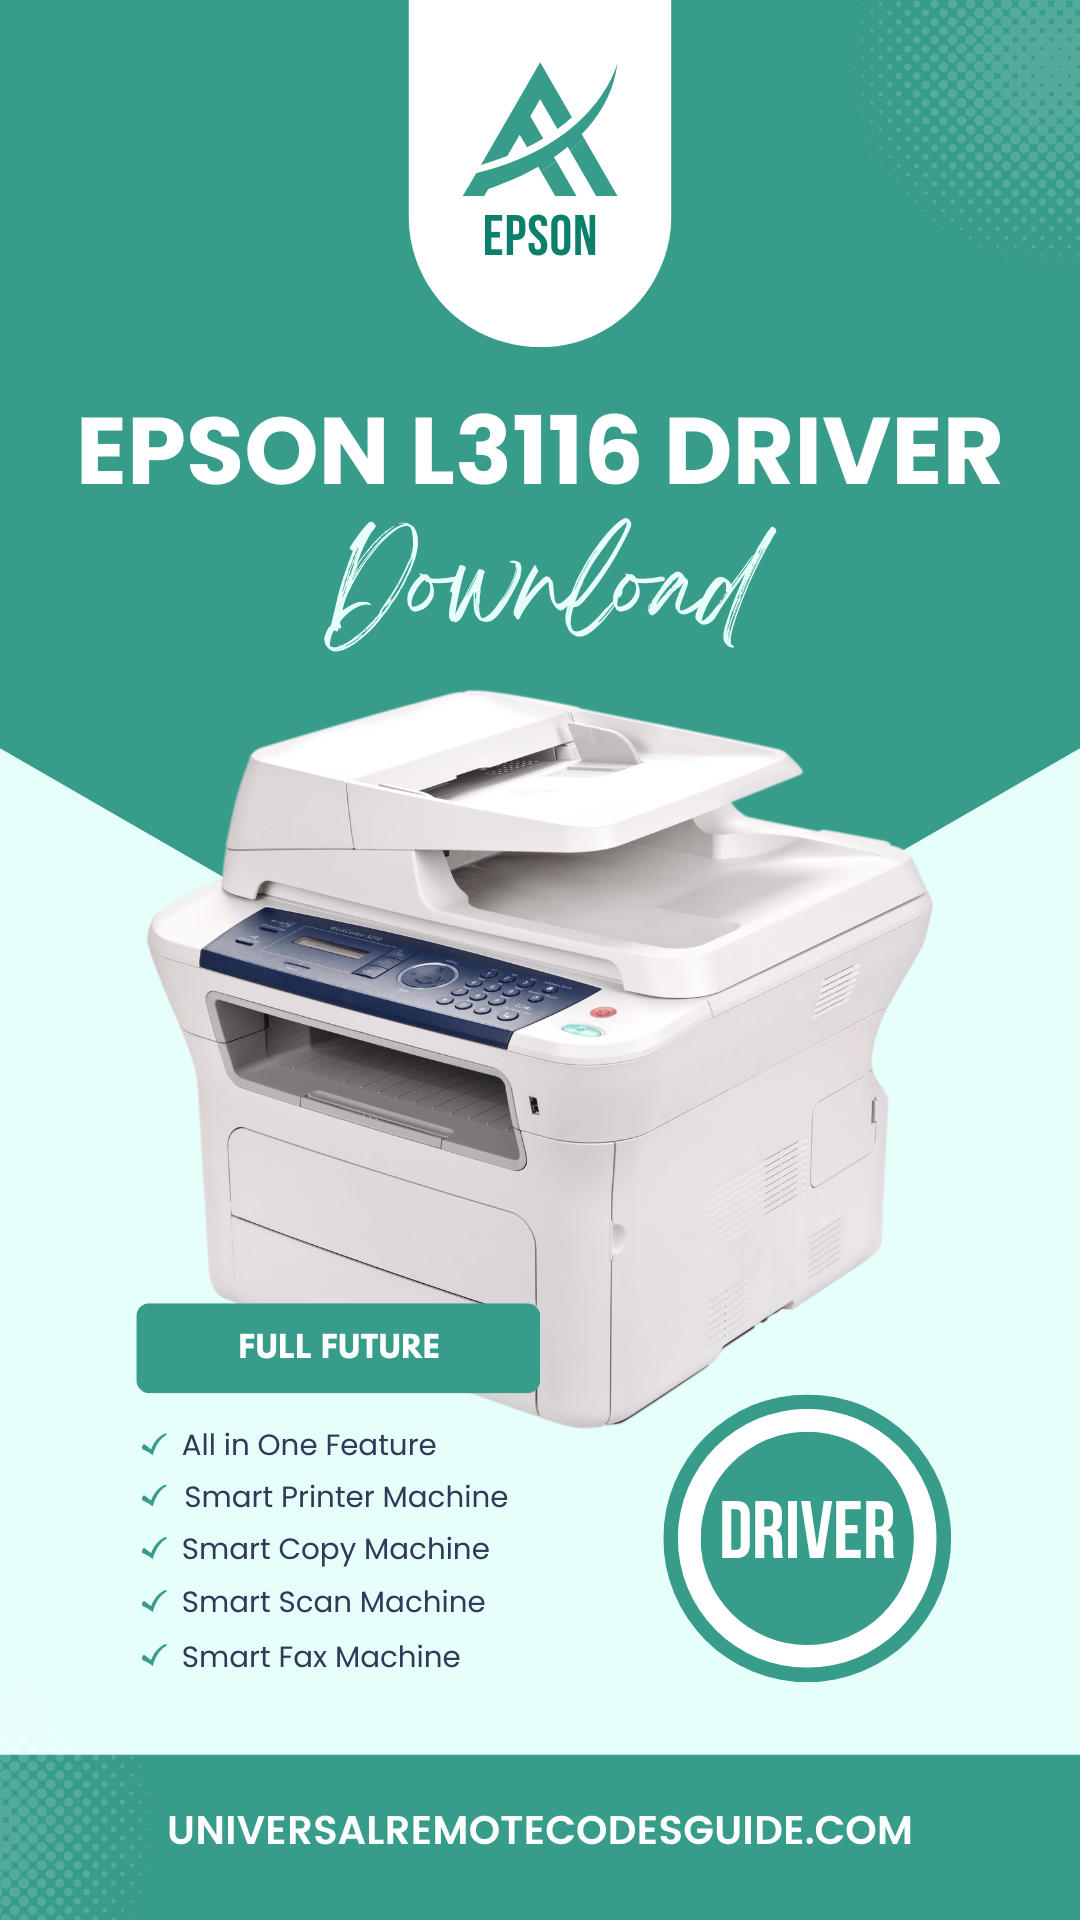 Epson L3116 Driver Free Download